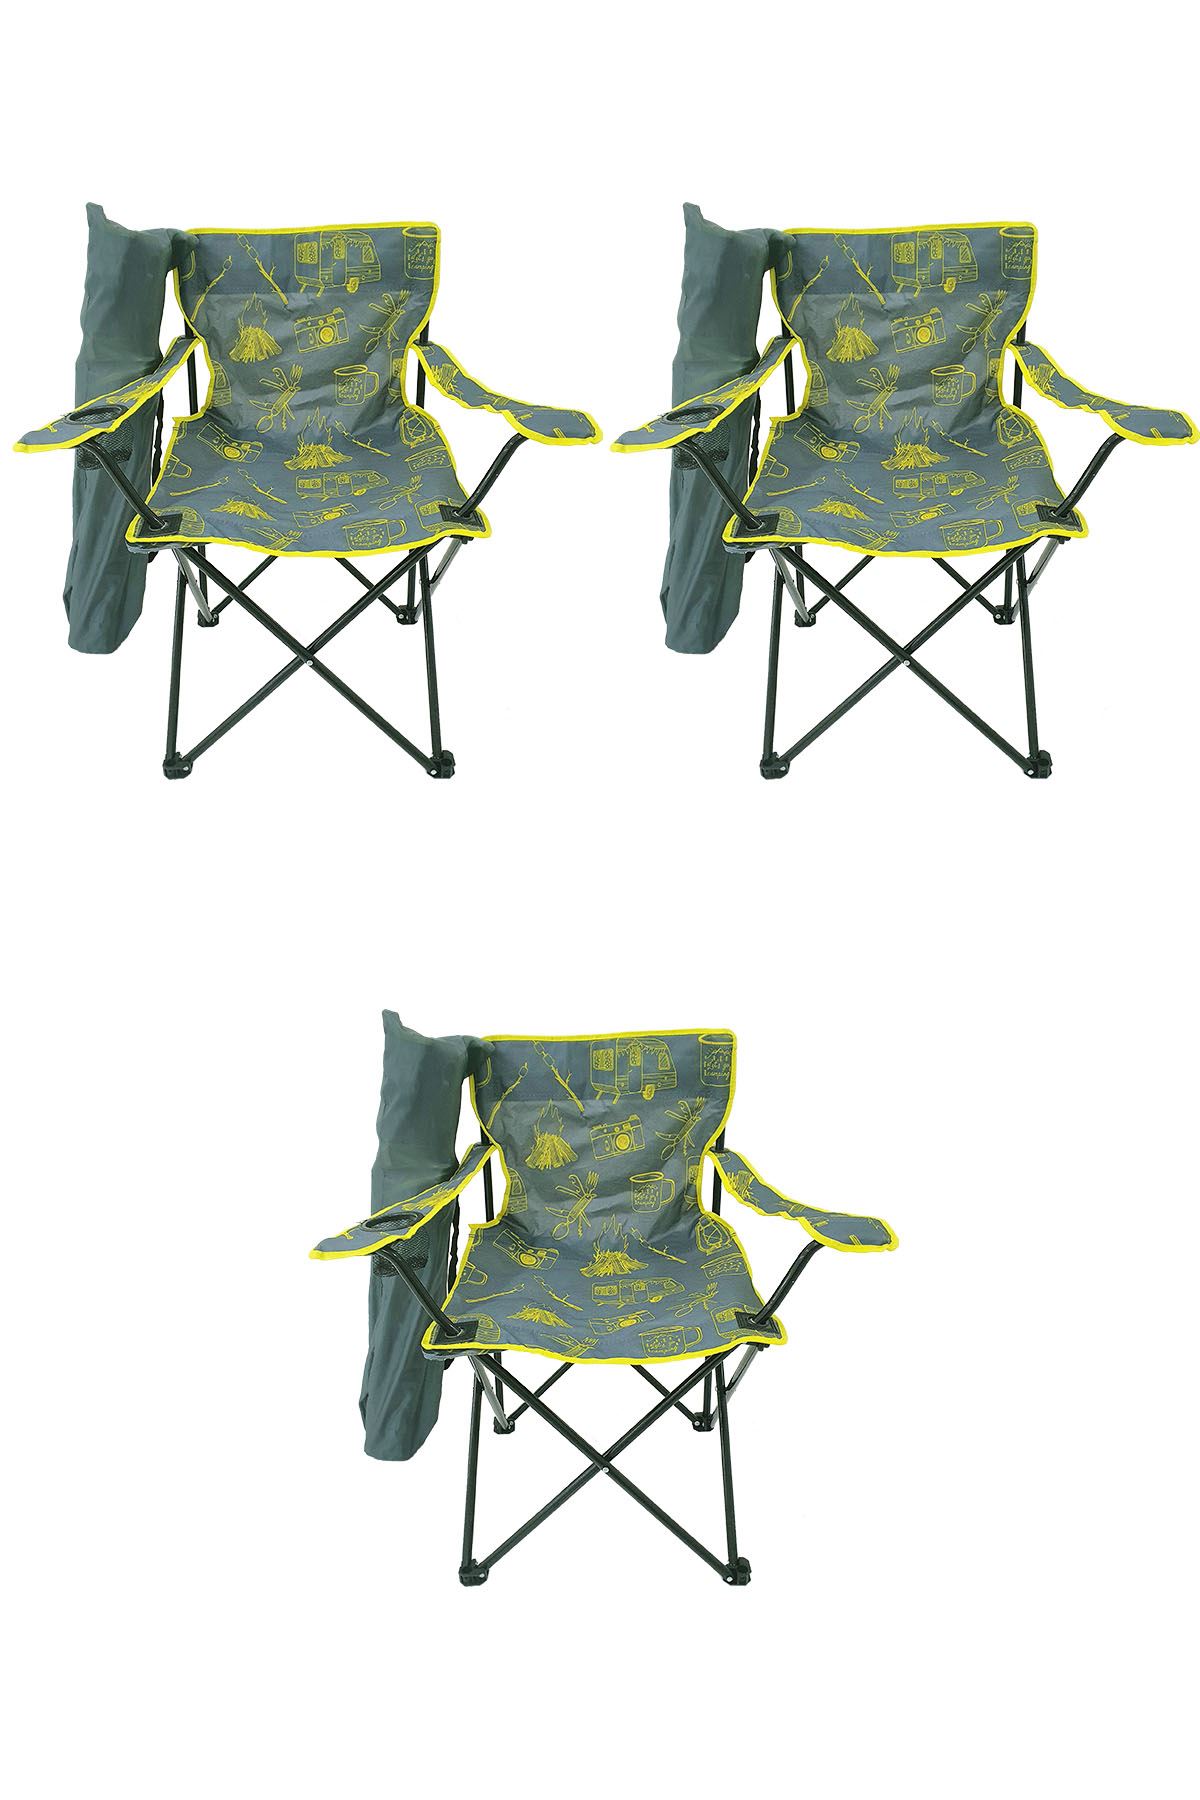 Bofigo 3 Pcs Camping Chair Folding Chair Garden Chair Picnic Beach Chair Patterned Gray